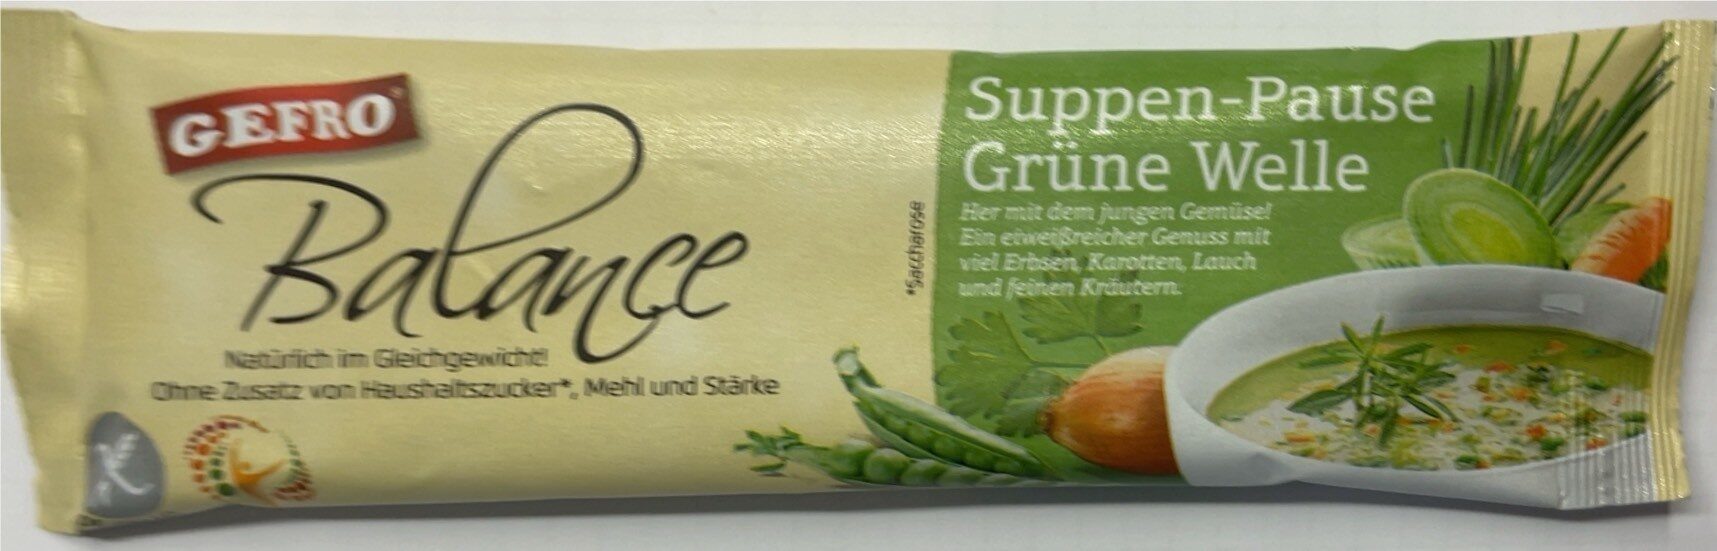 Suppen-Pause Grüne Welle - Produkt - fr